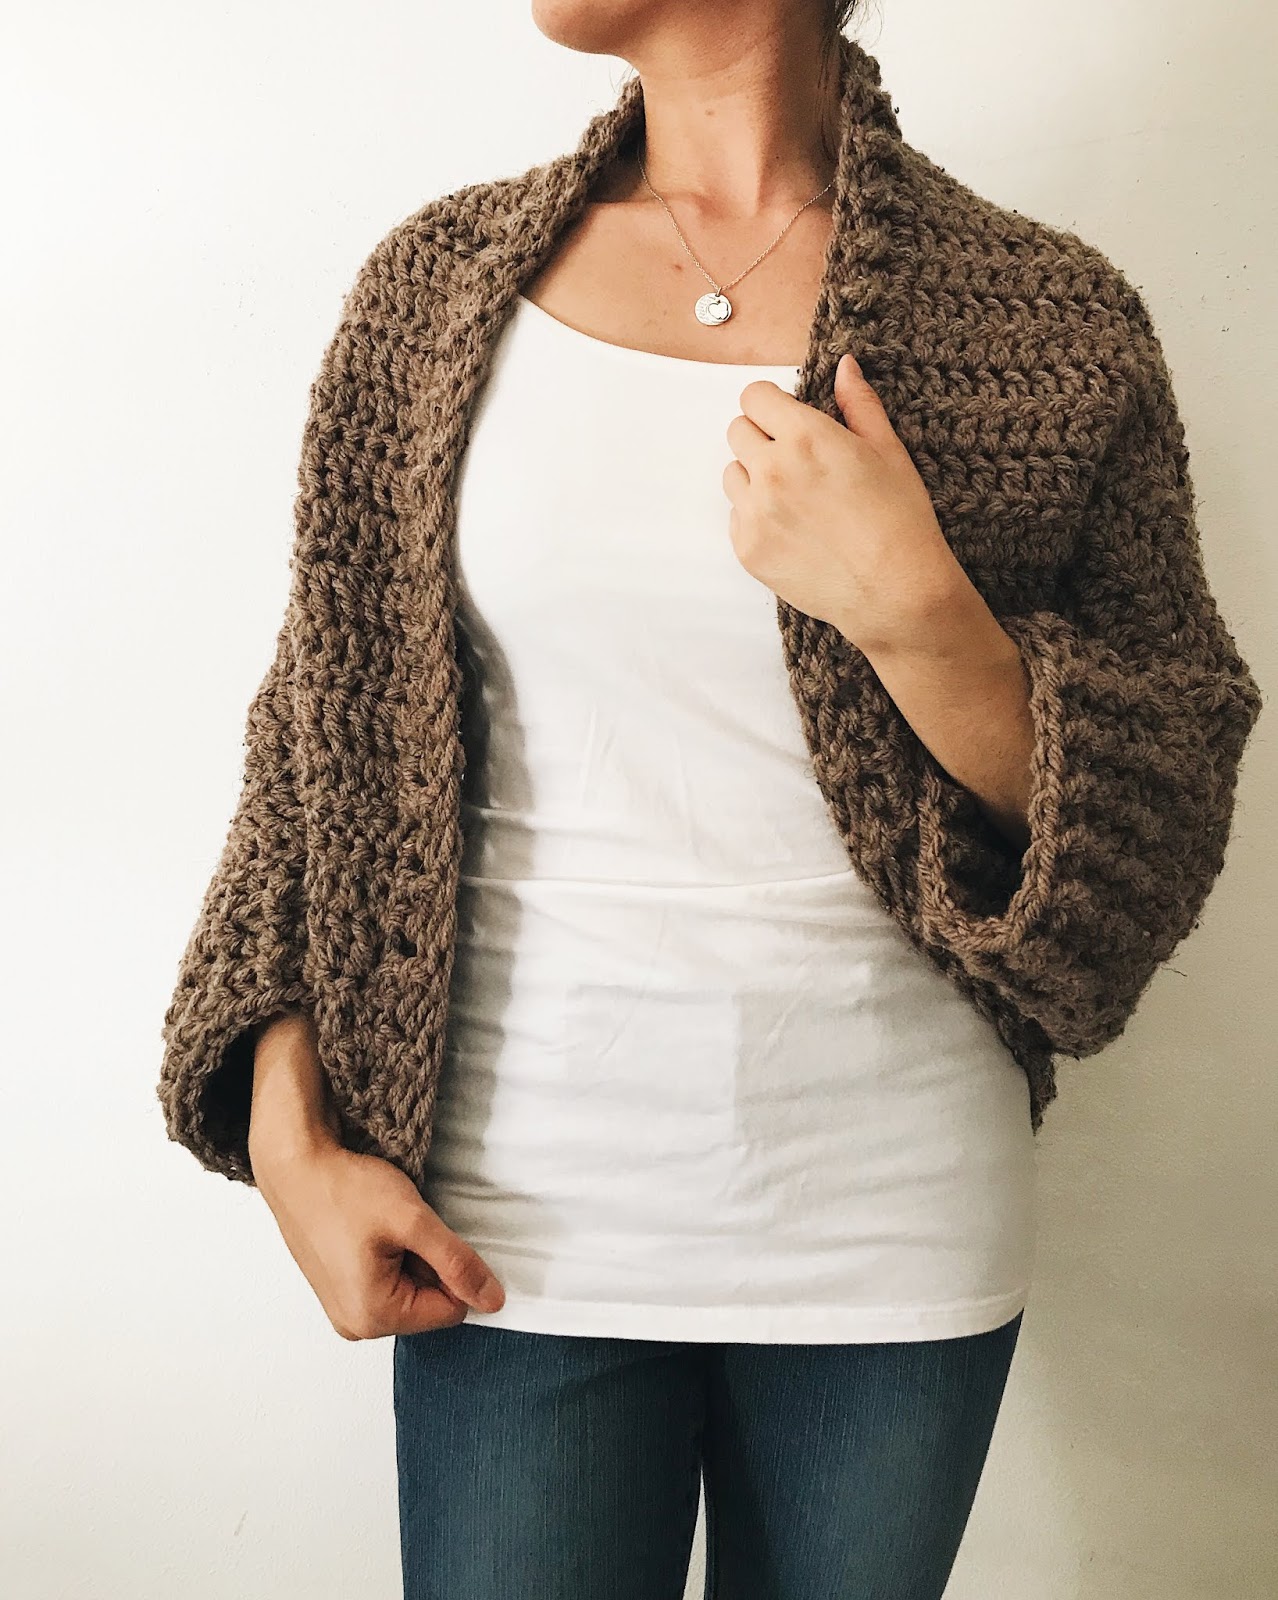 Brenna Ann Handmade: FREE CROCHET PATTERN - The Simple Chunky Crochet